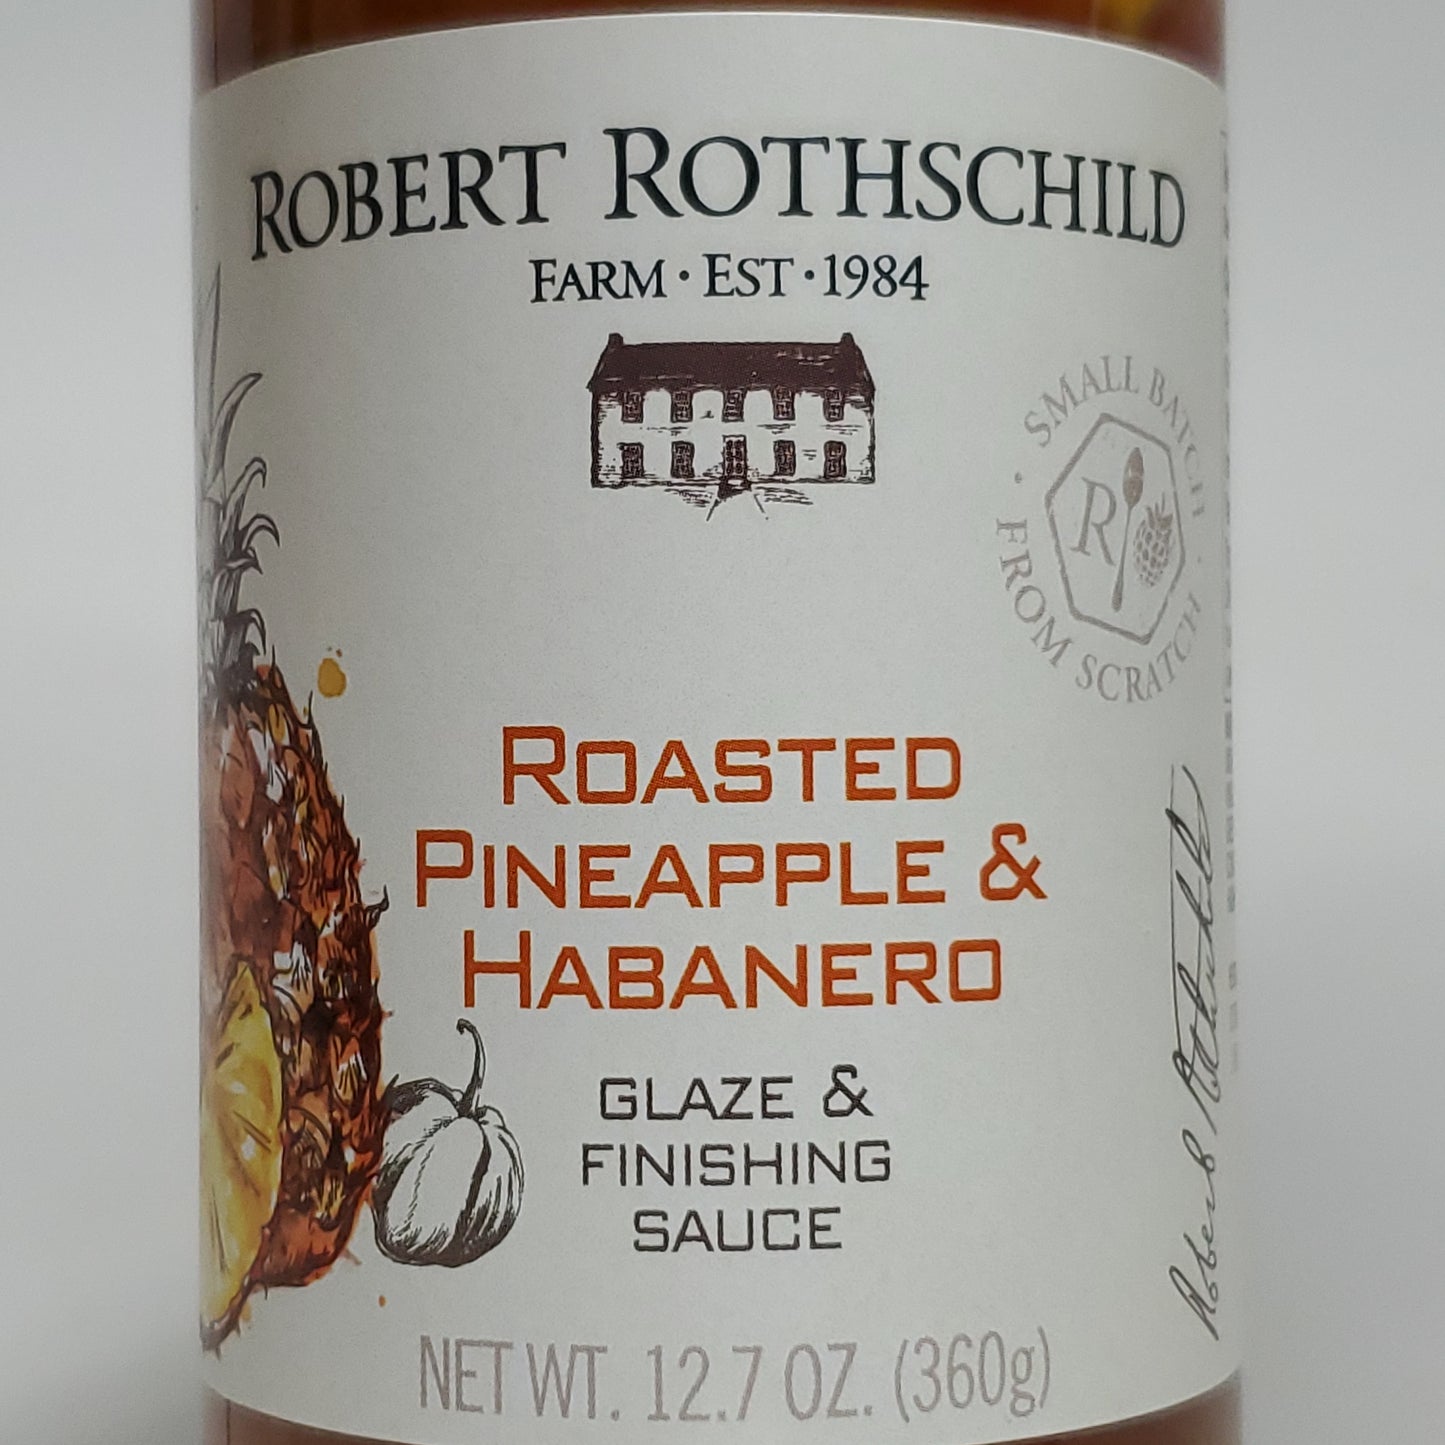 ROBERT ROTHSCHILD 6-PK of Roasted Pineapple & Habanero Glaze & Finishing Sauce 12.7 oz 03/24